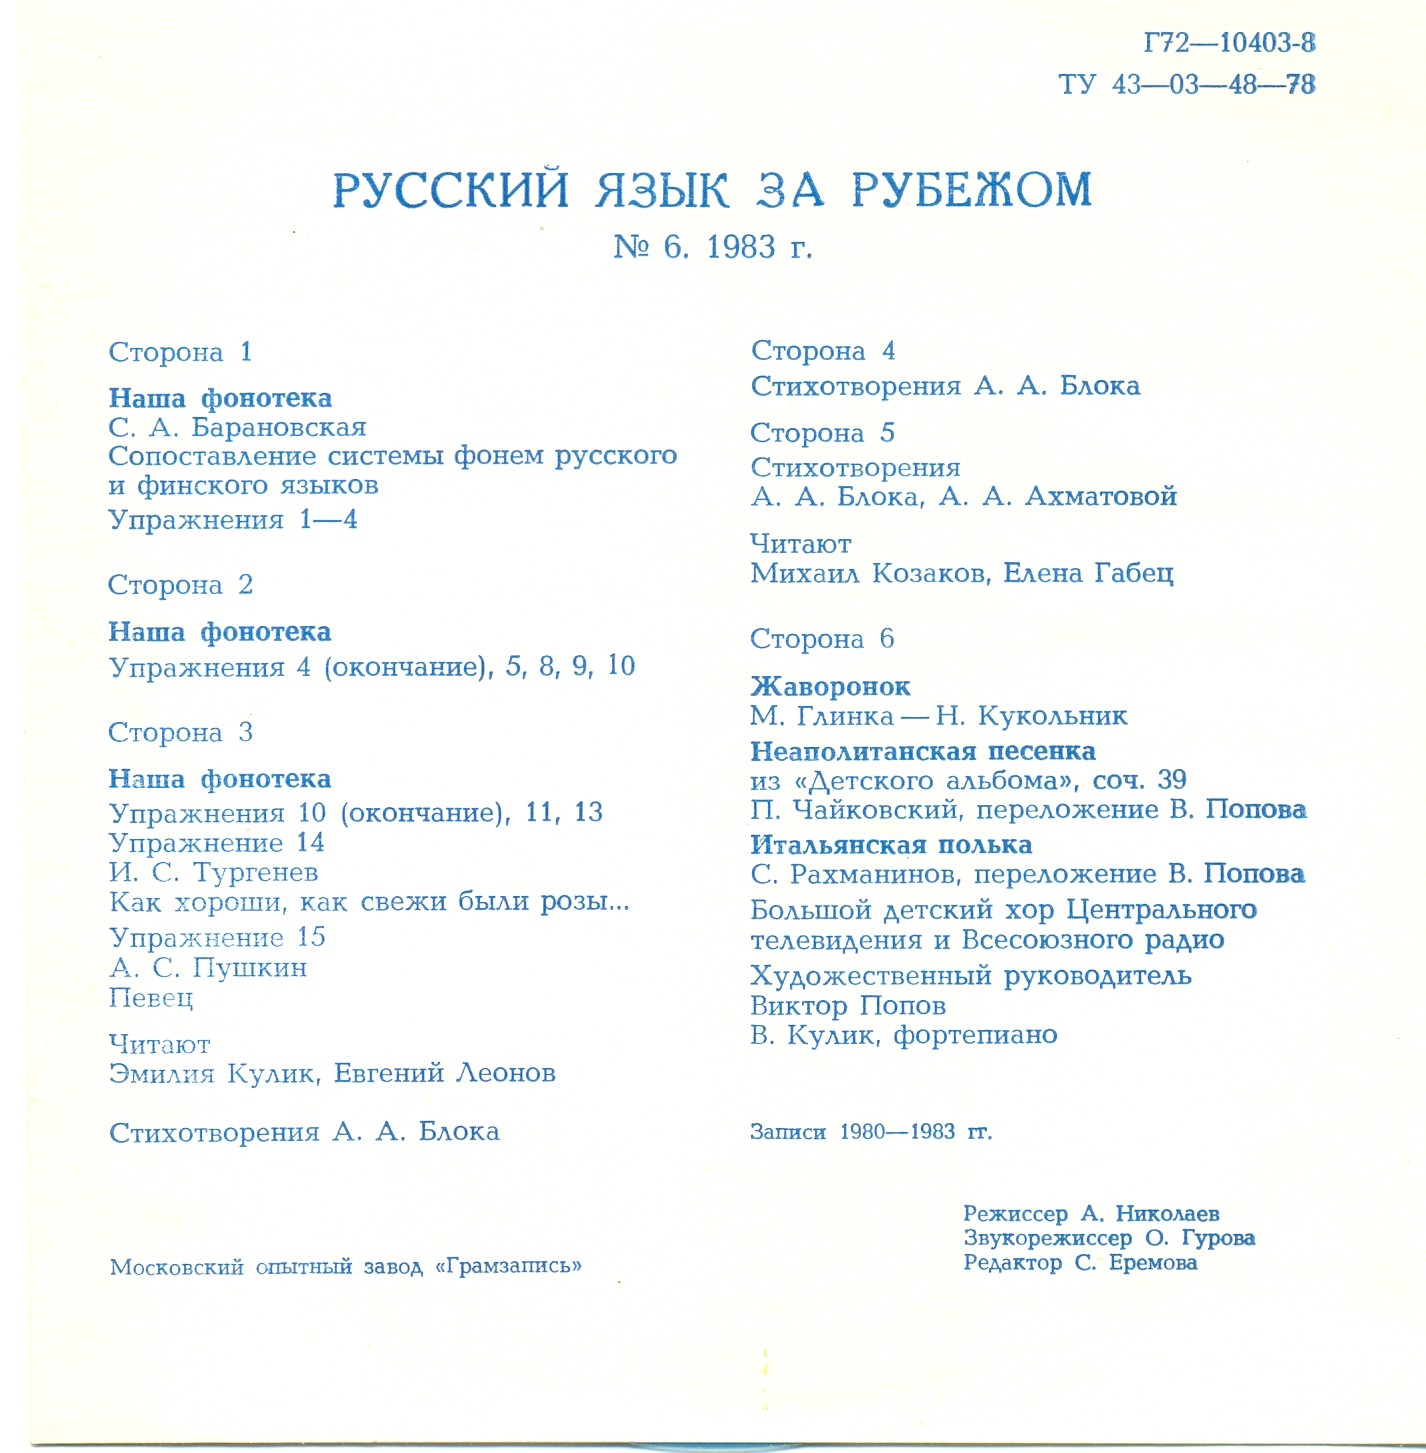 "РУССКИЙ ЯЗЫК ЗА РУБЕЖОМ" , № 6 - 1983